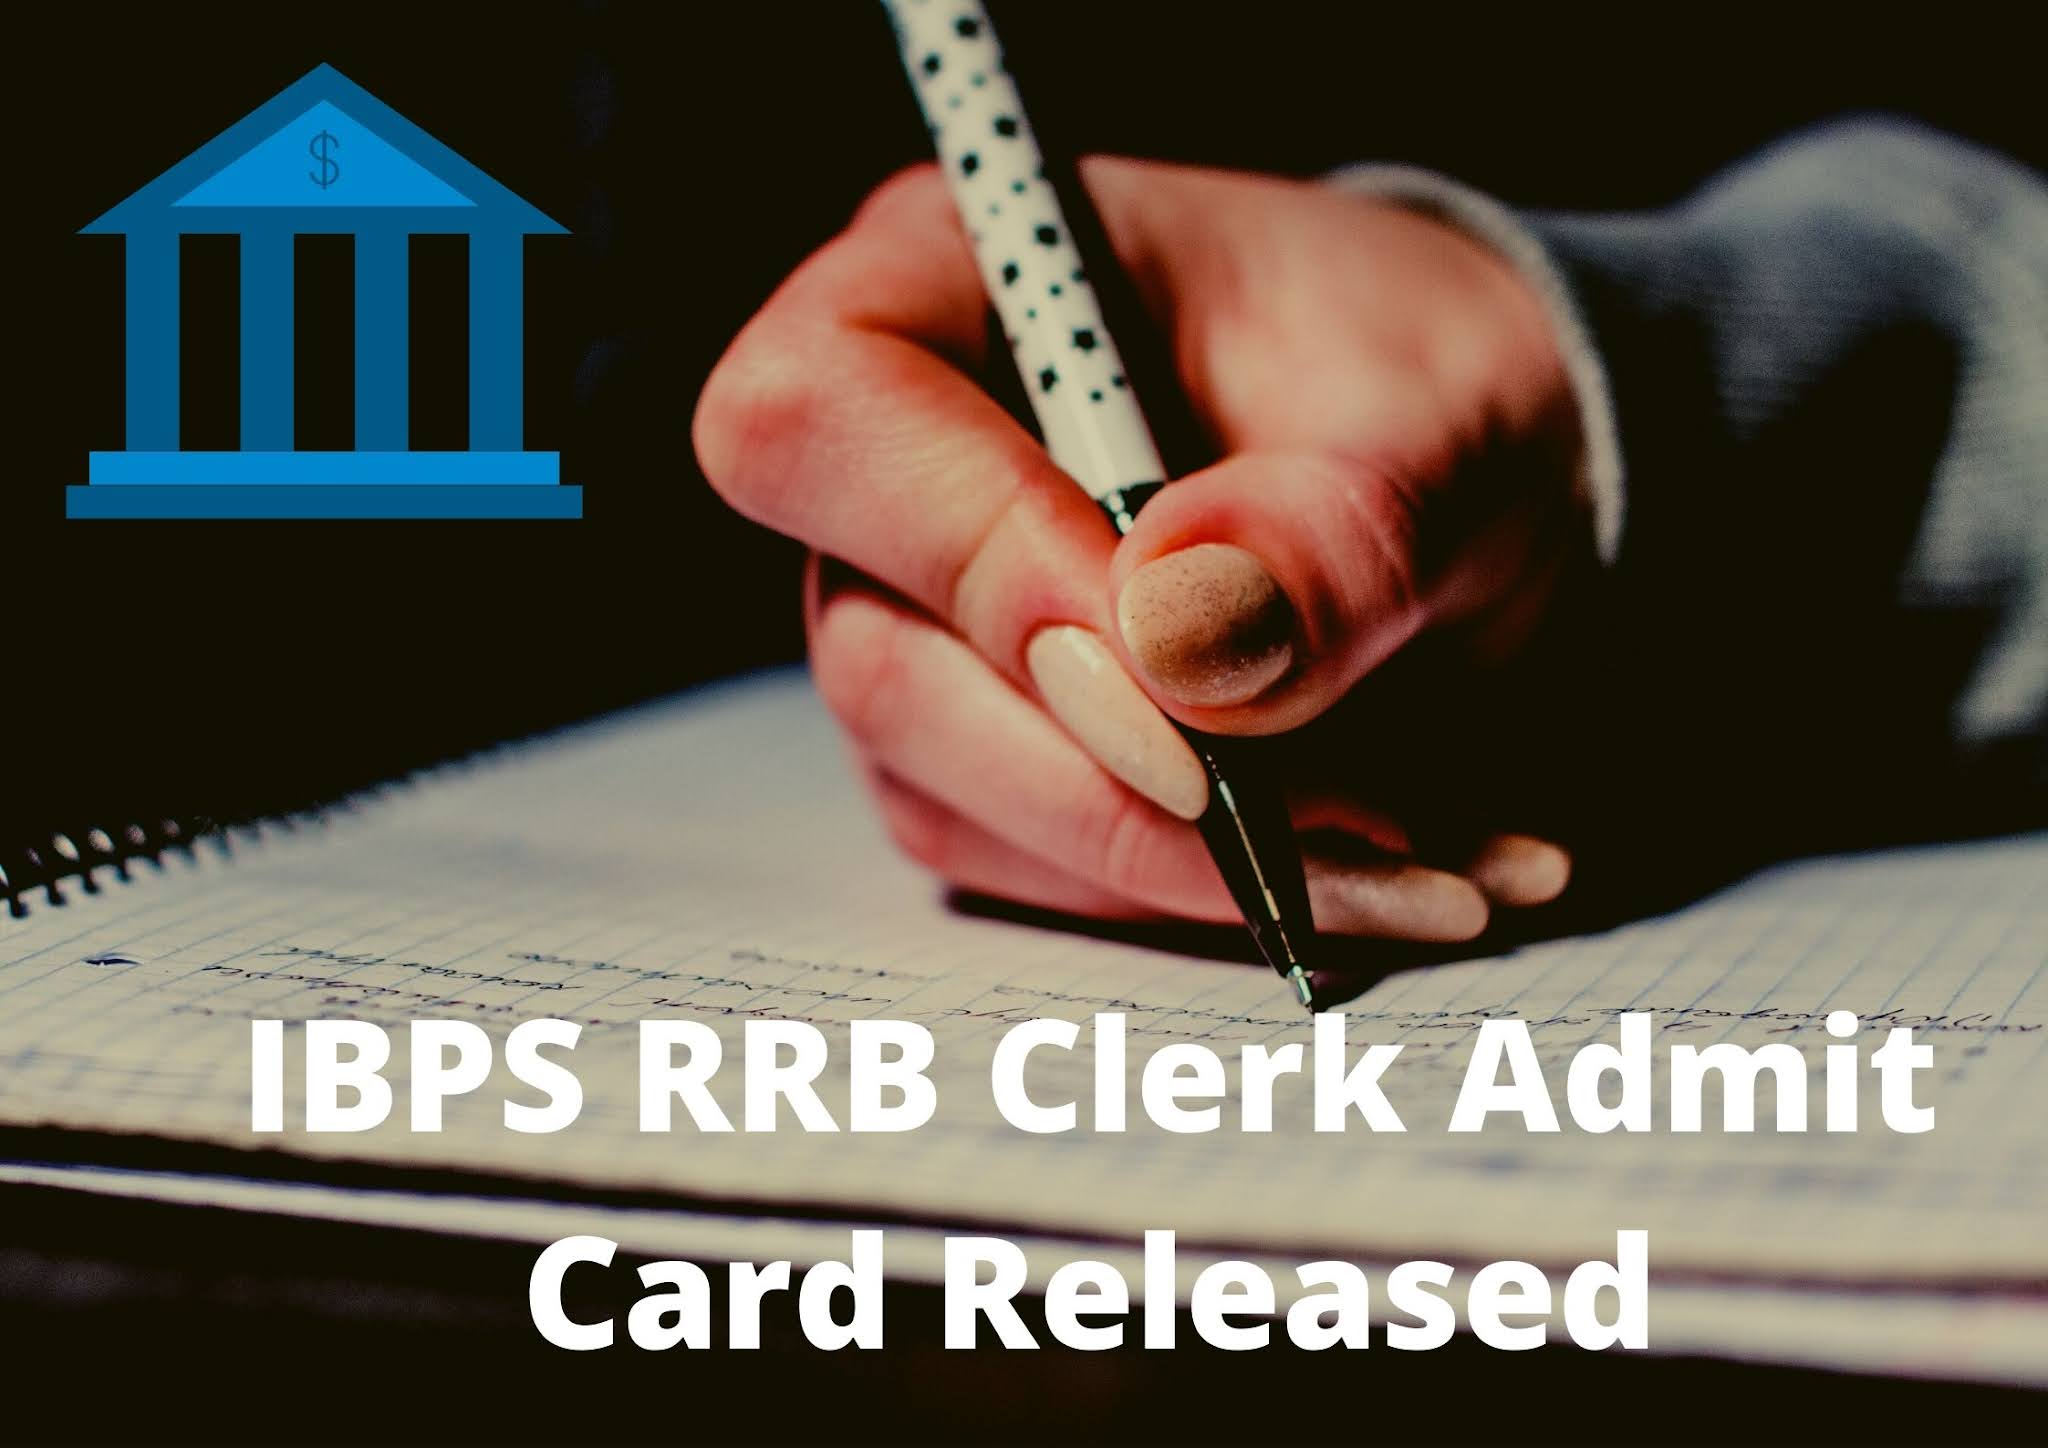 ibps rrb clerk admit card